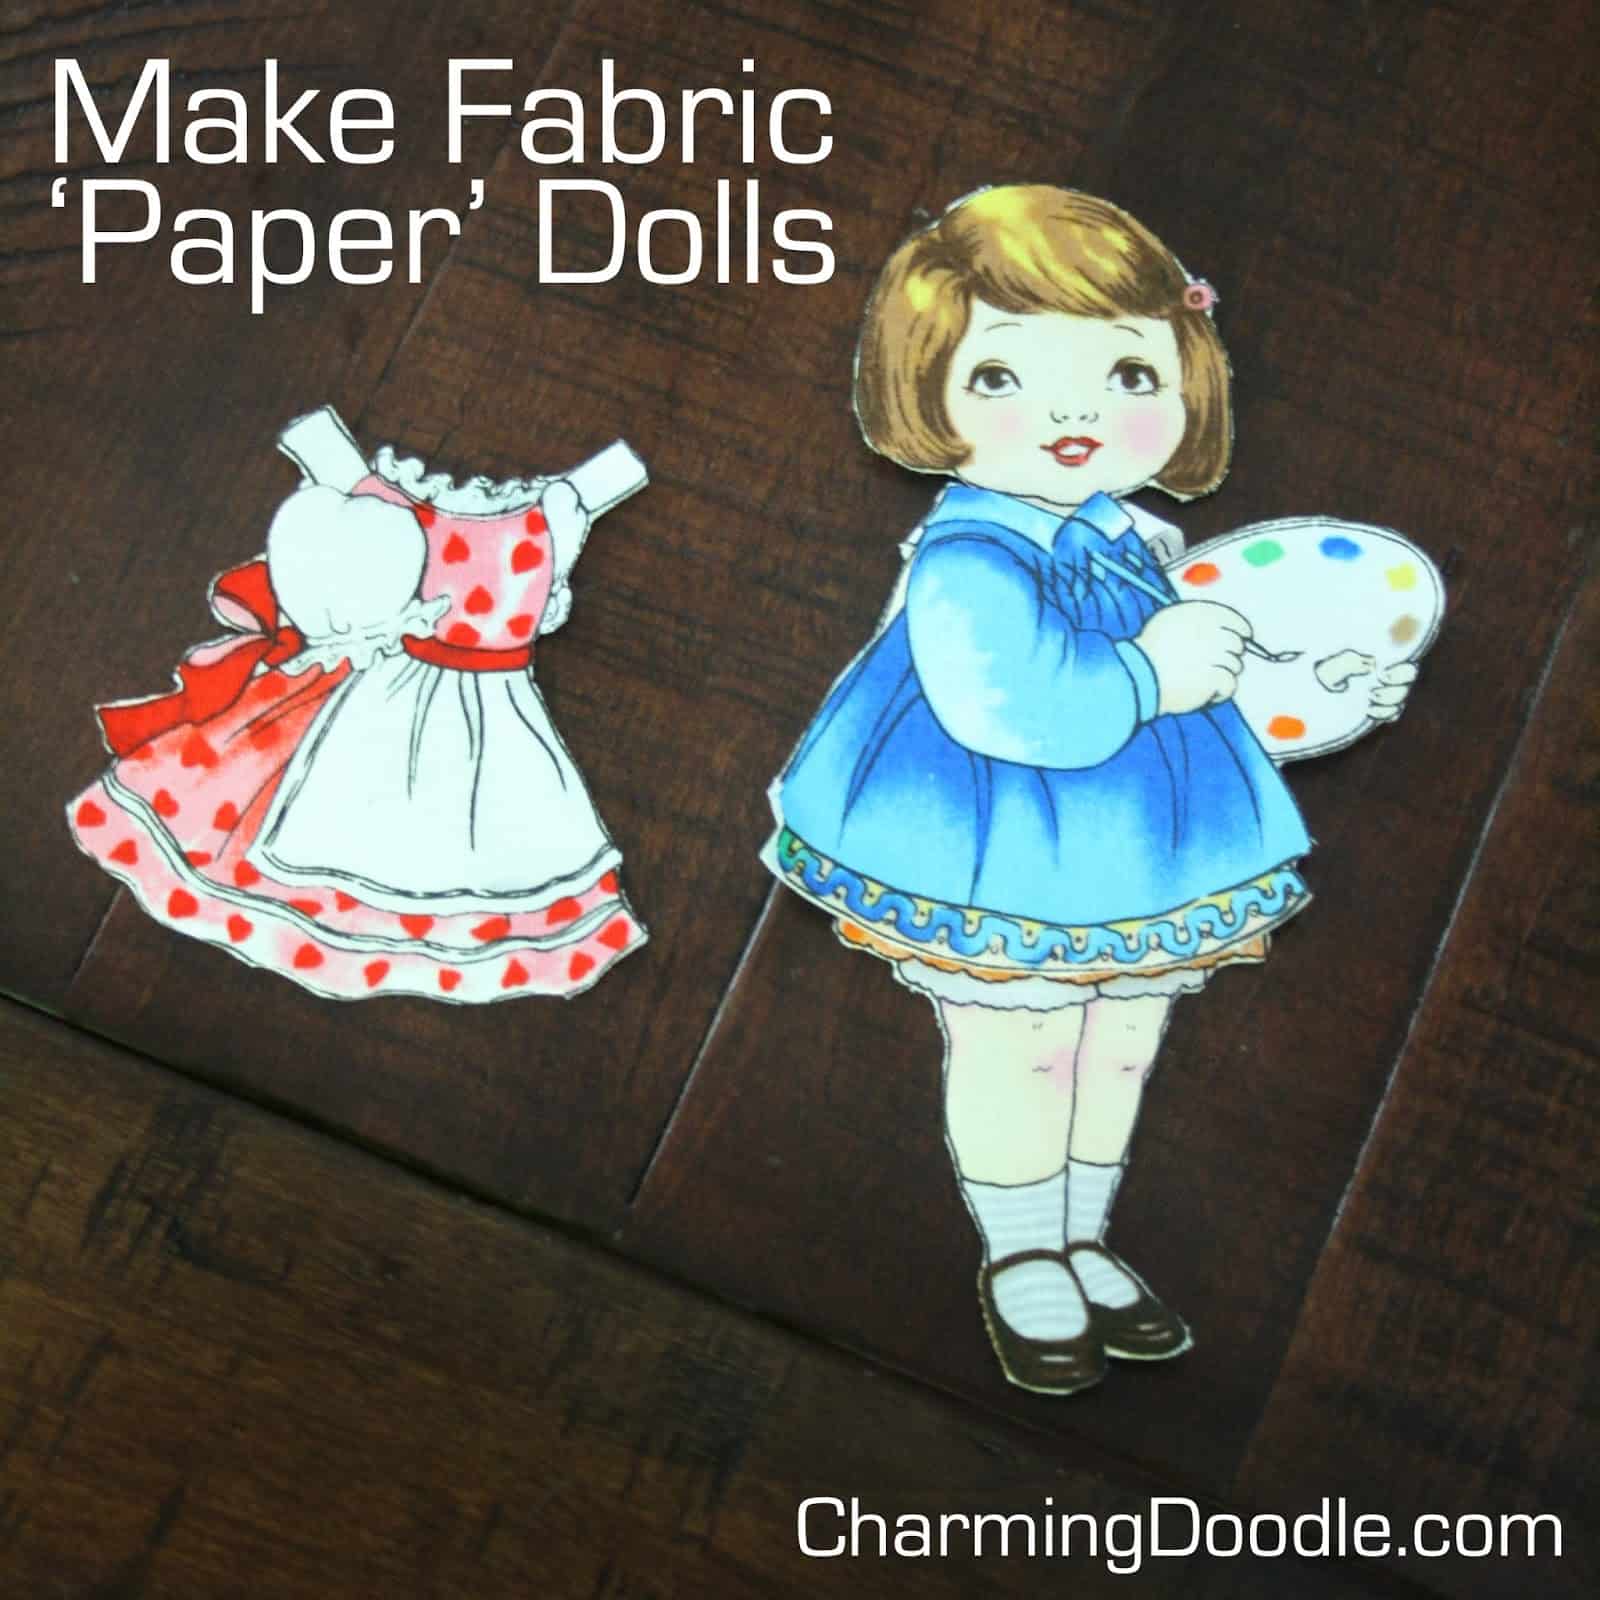 Fabric paper dolls